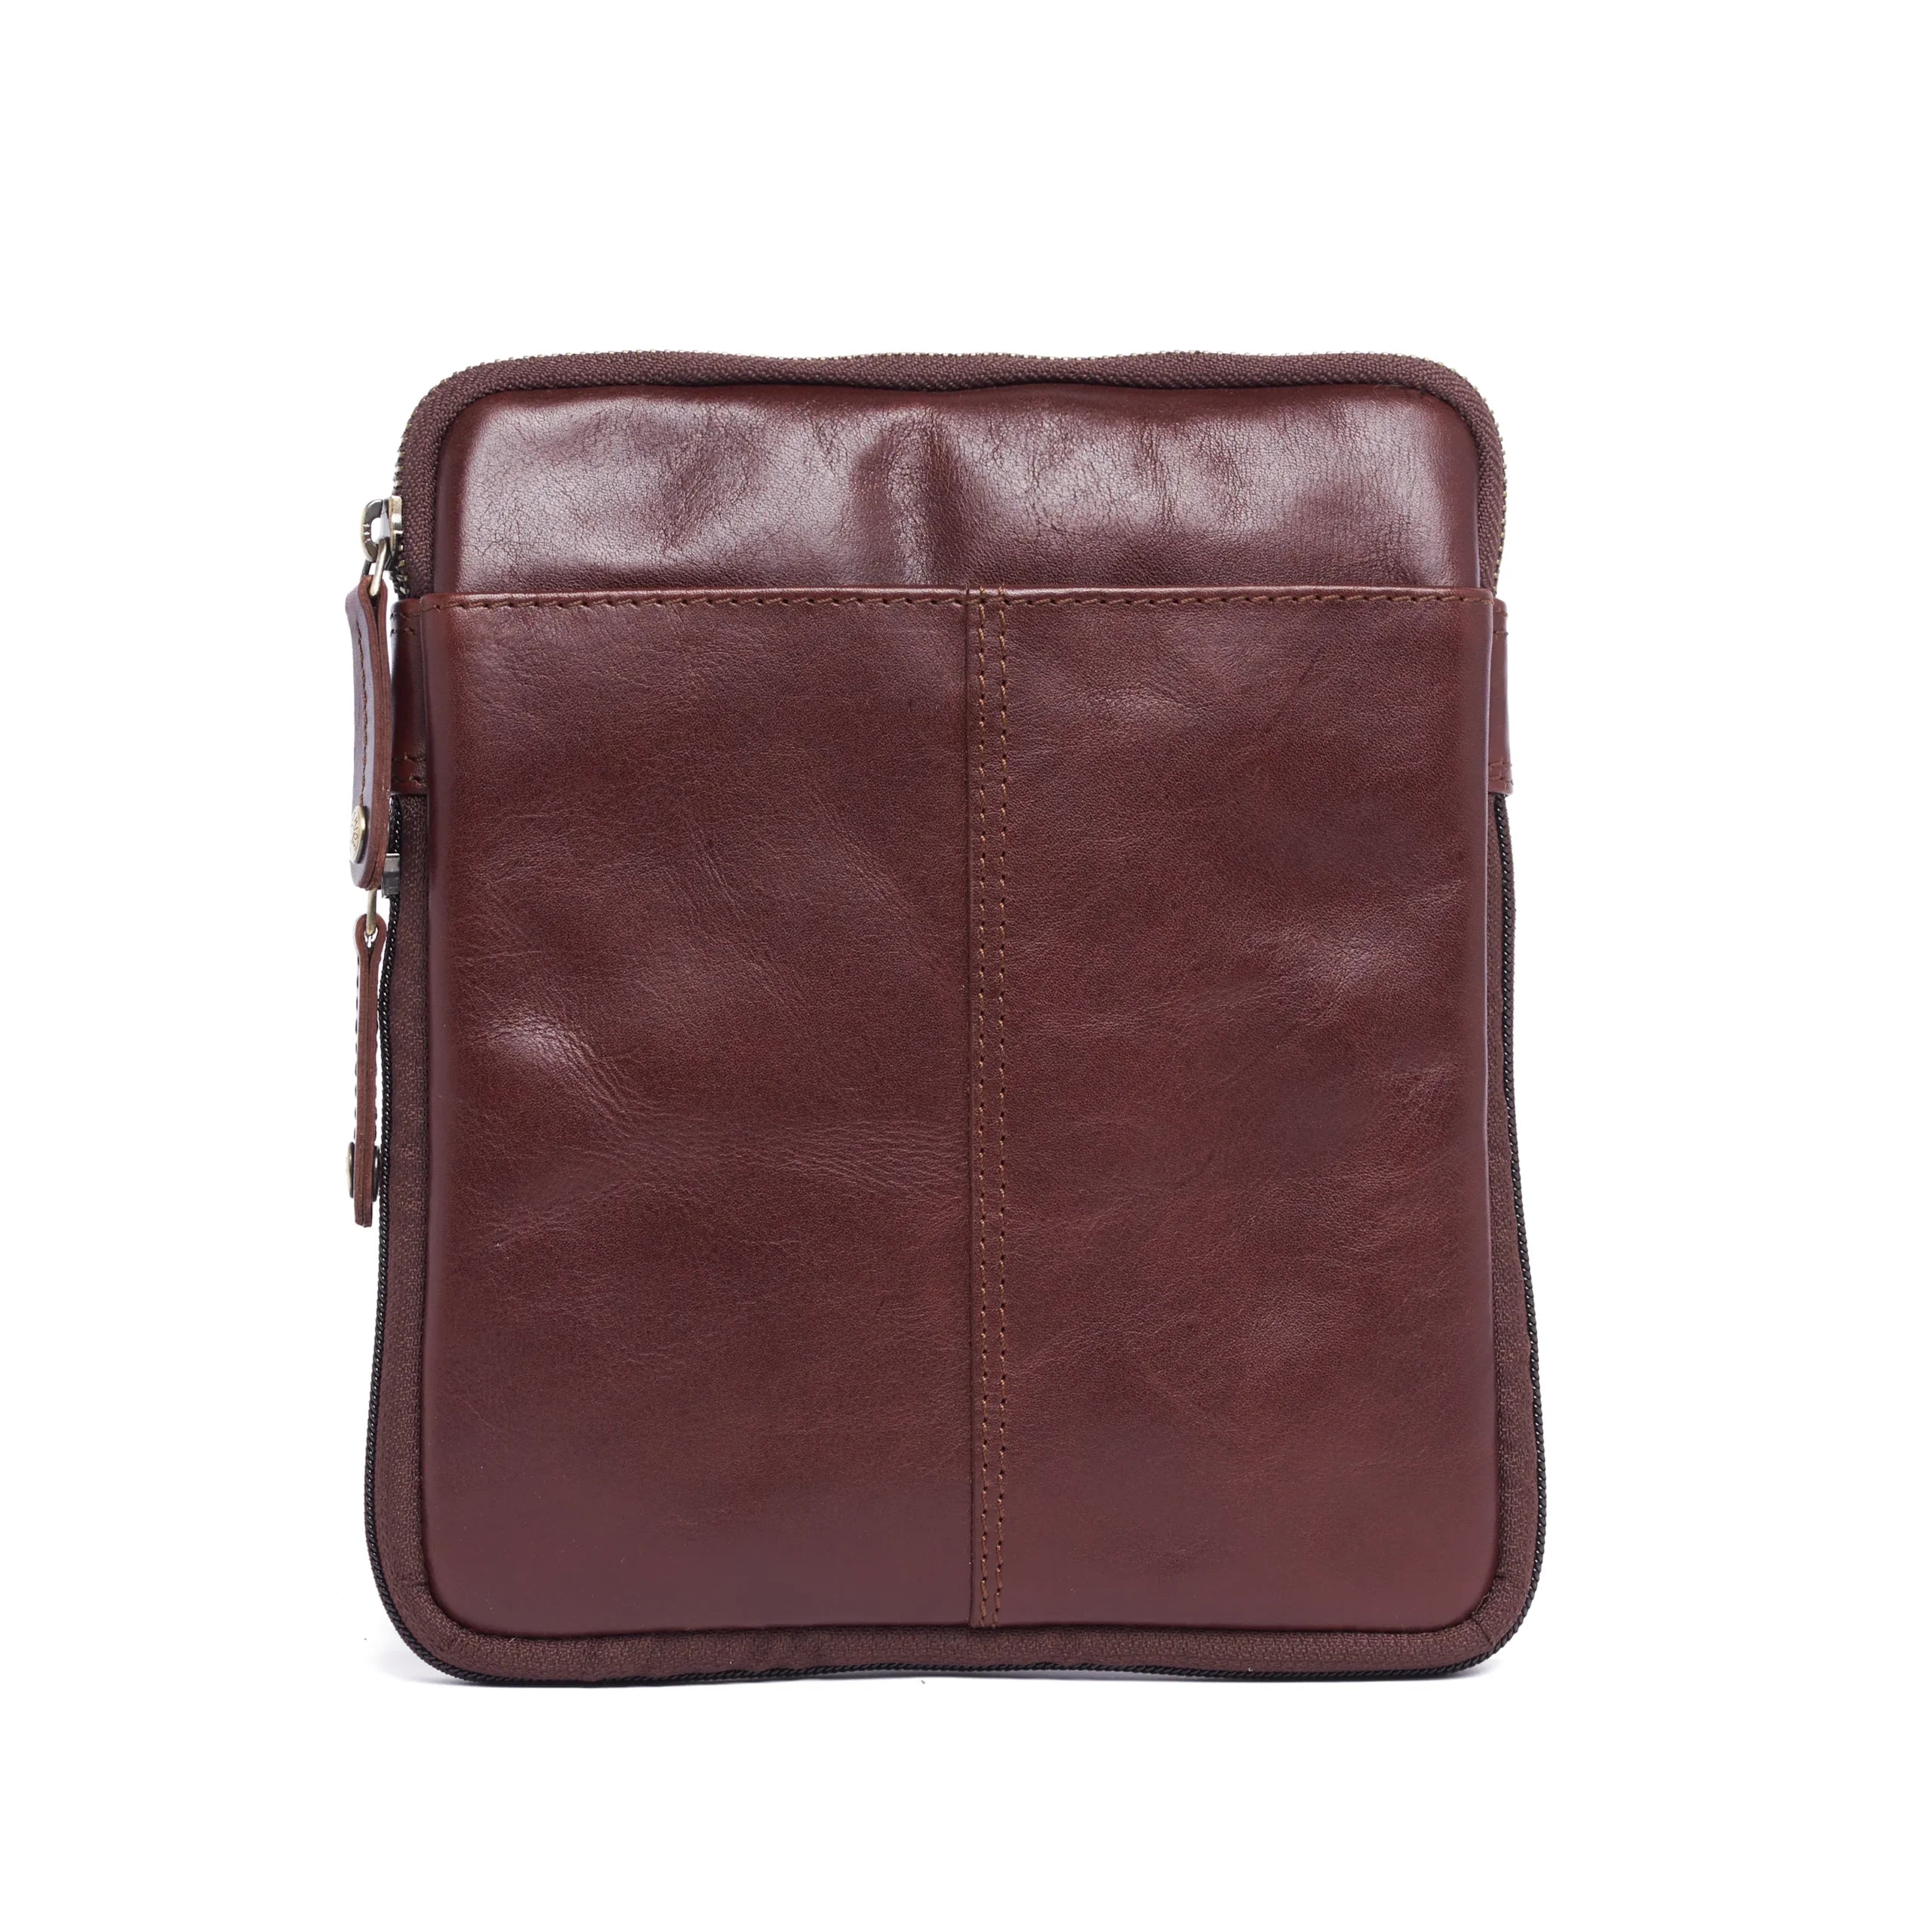 Oran - RH-2365 Cross body leather side bag - Brandy